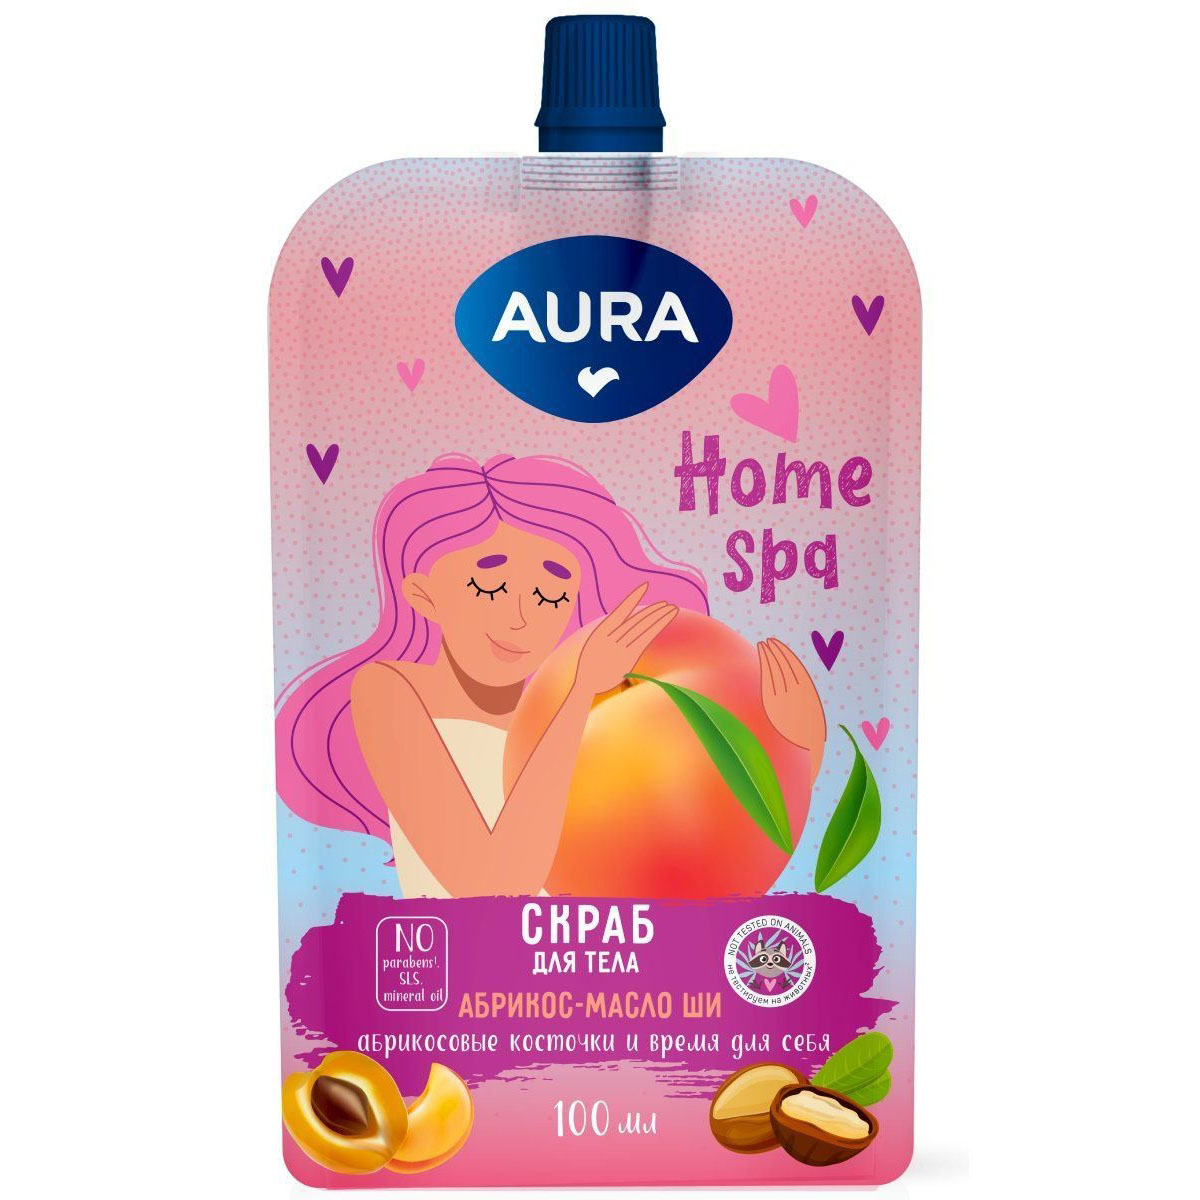 Aura Скраб для тела Абрикос и масло ши Home Spq, 100 мл (Aura, Beauty) aura скраб для тела абрикос и масло ши home spq 100 мл aura beauty